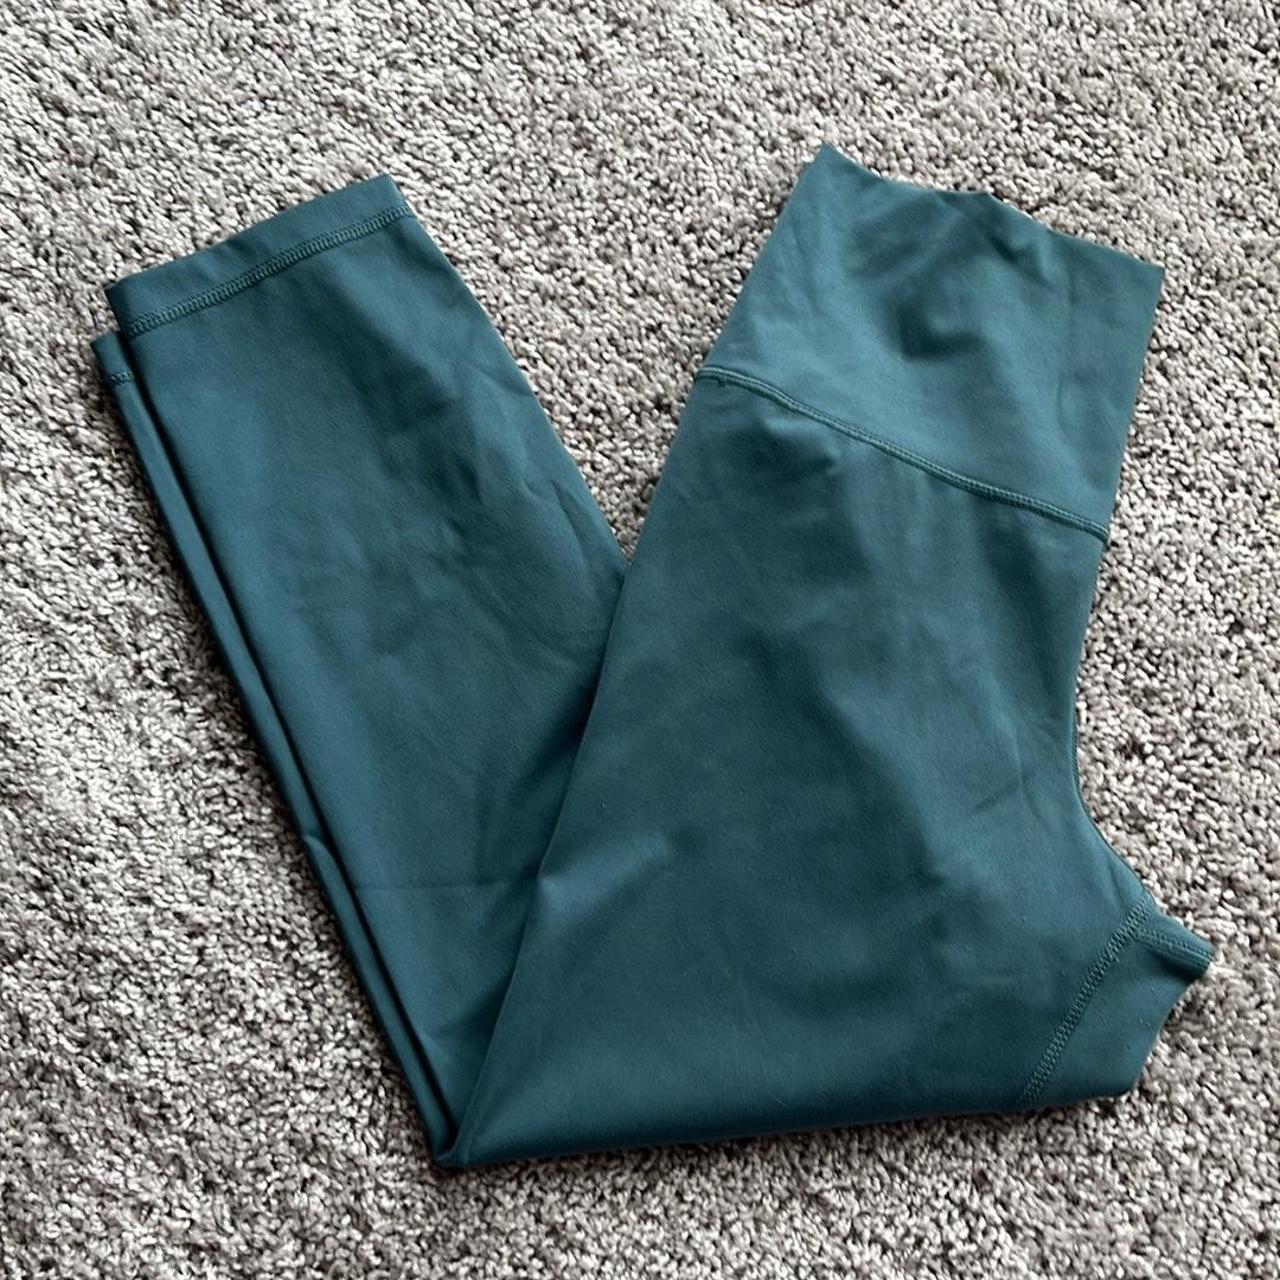 Yoga licious leggings! • green teal color • some - Depop